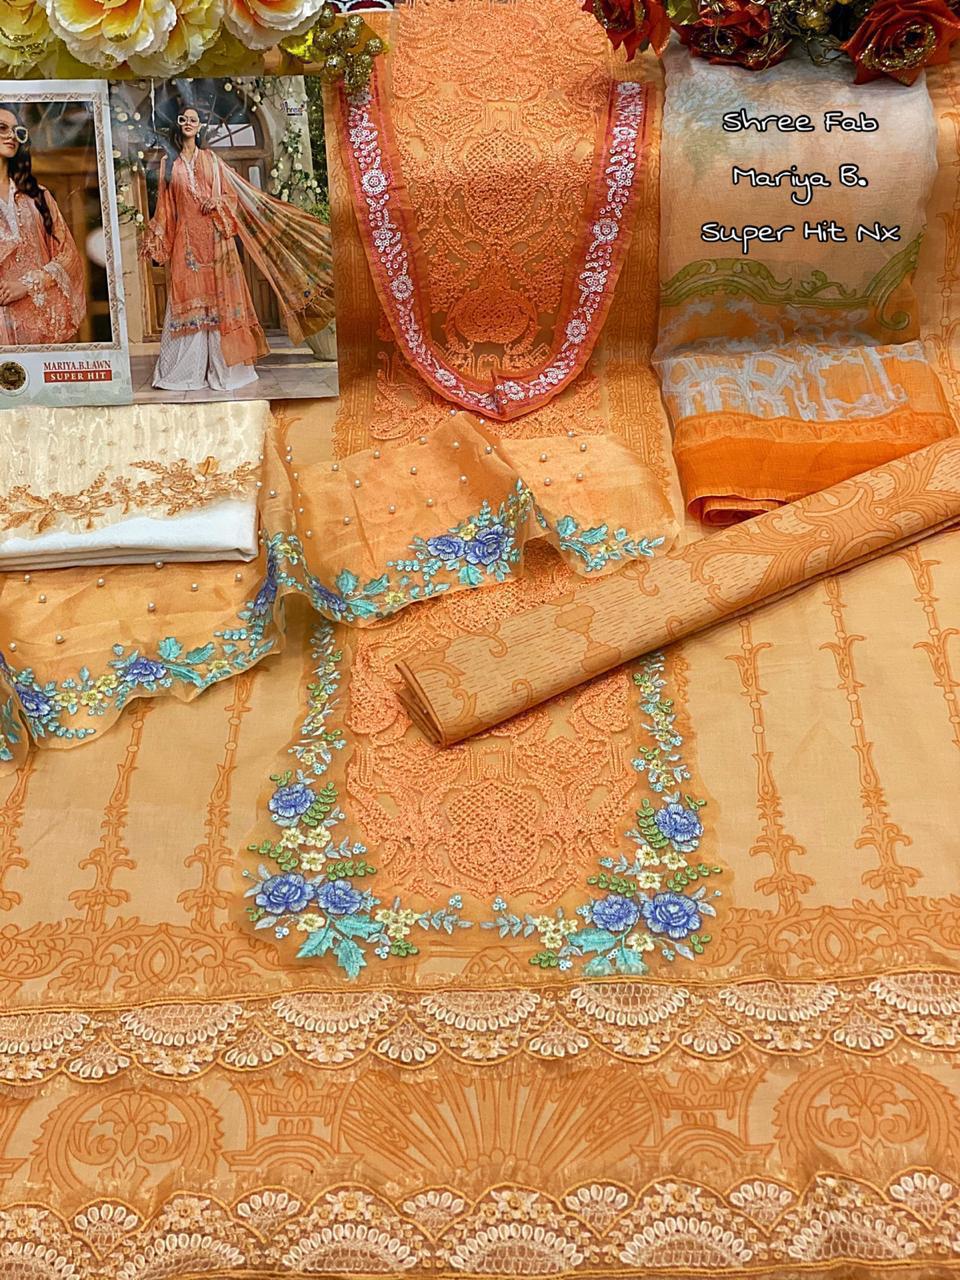 Shree Fab Mariya B Superhit Cotton Printed Embroidery Work Suits Wholesale Rate